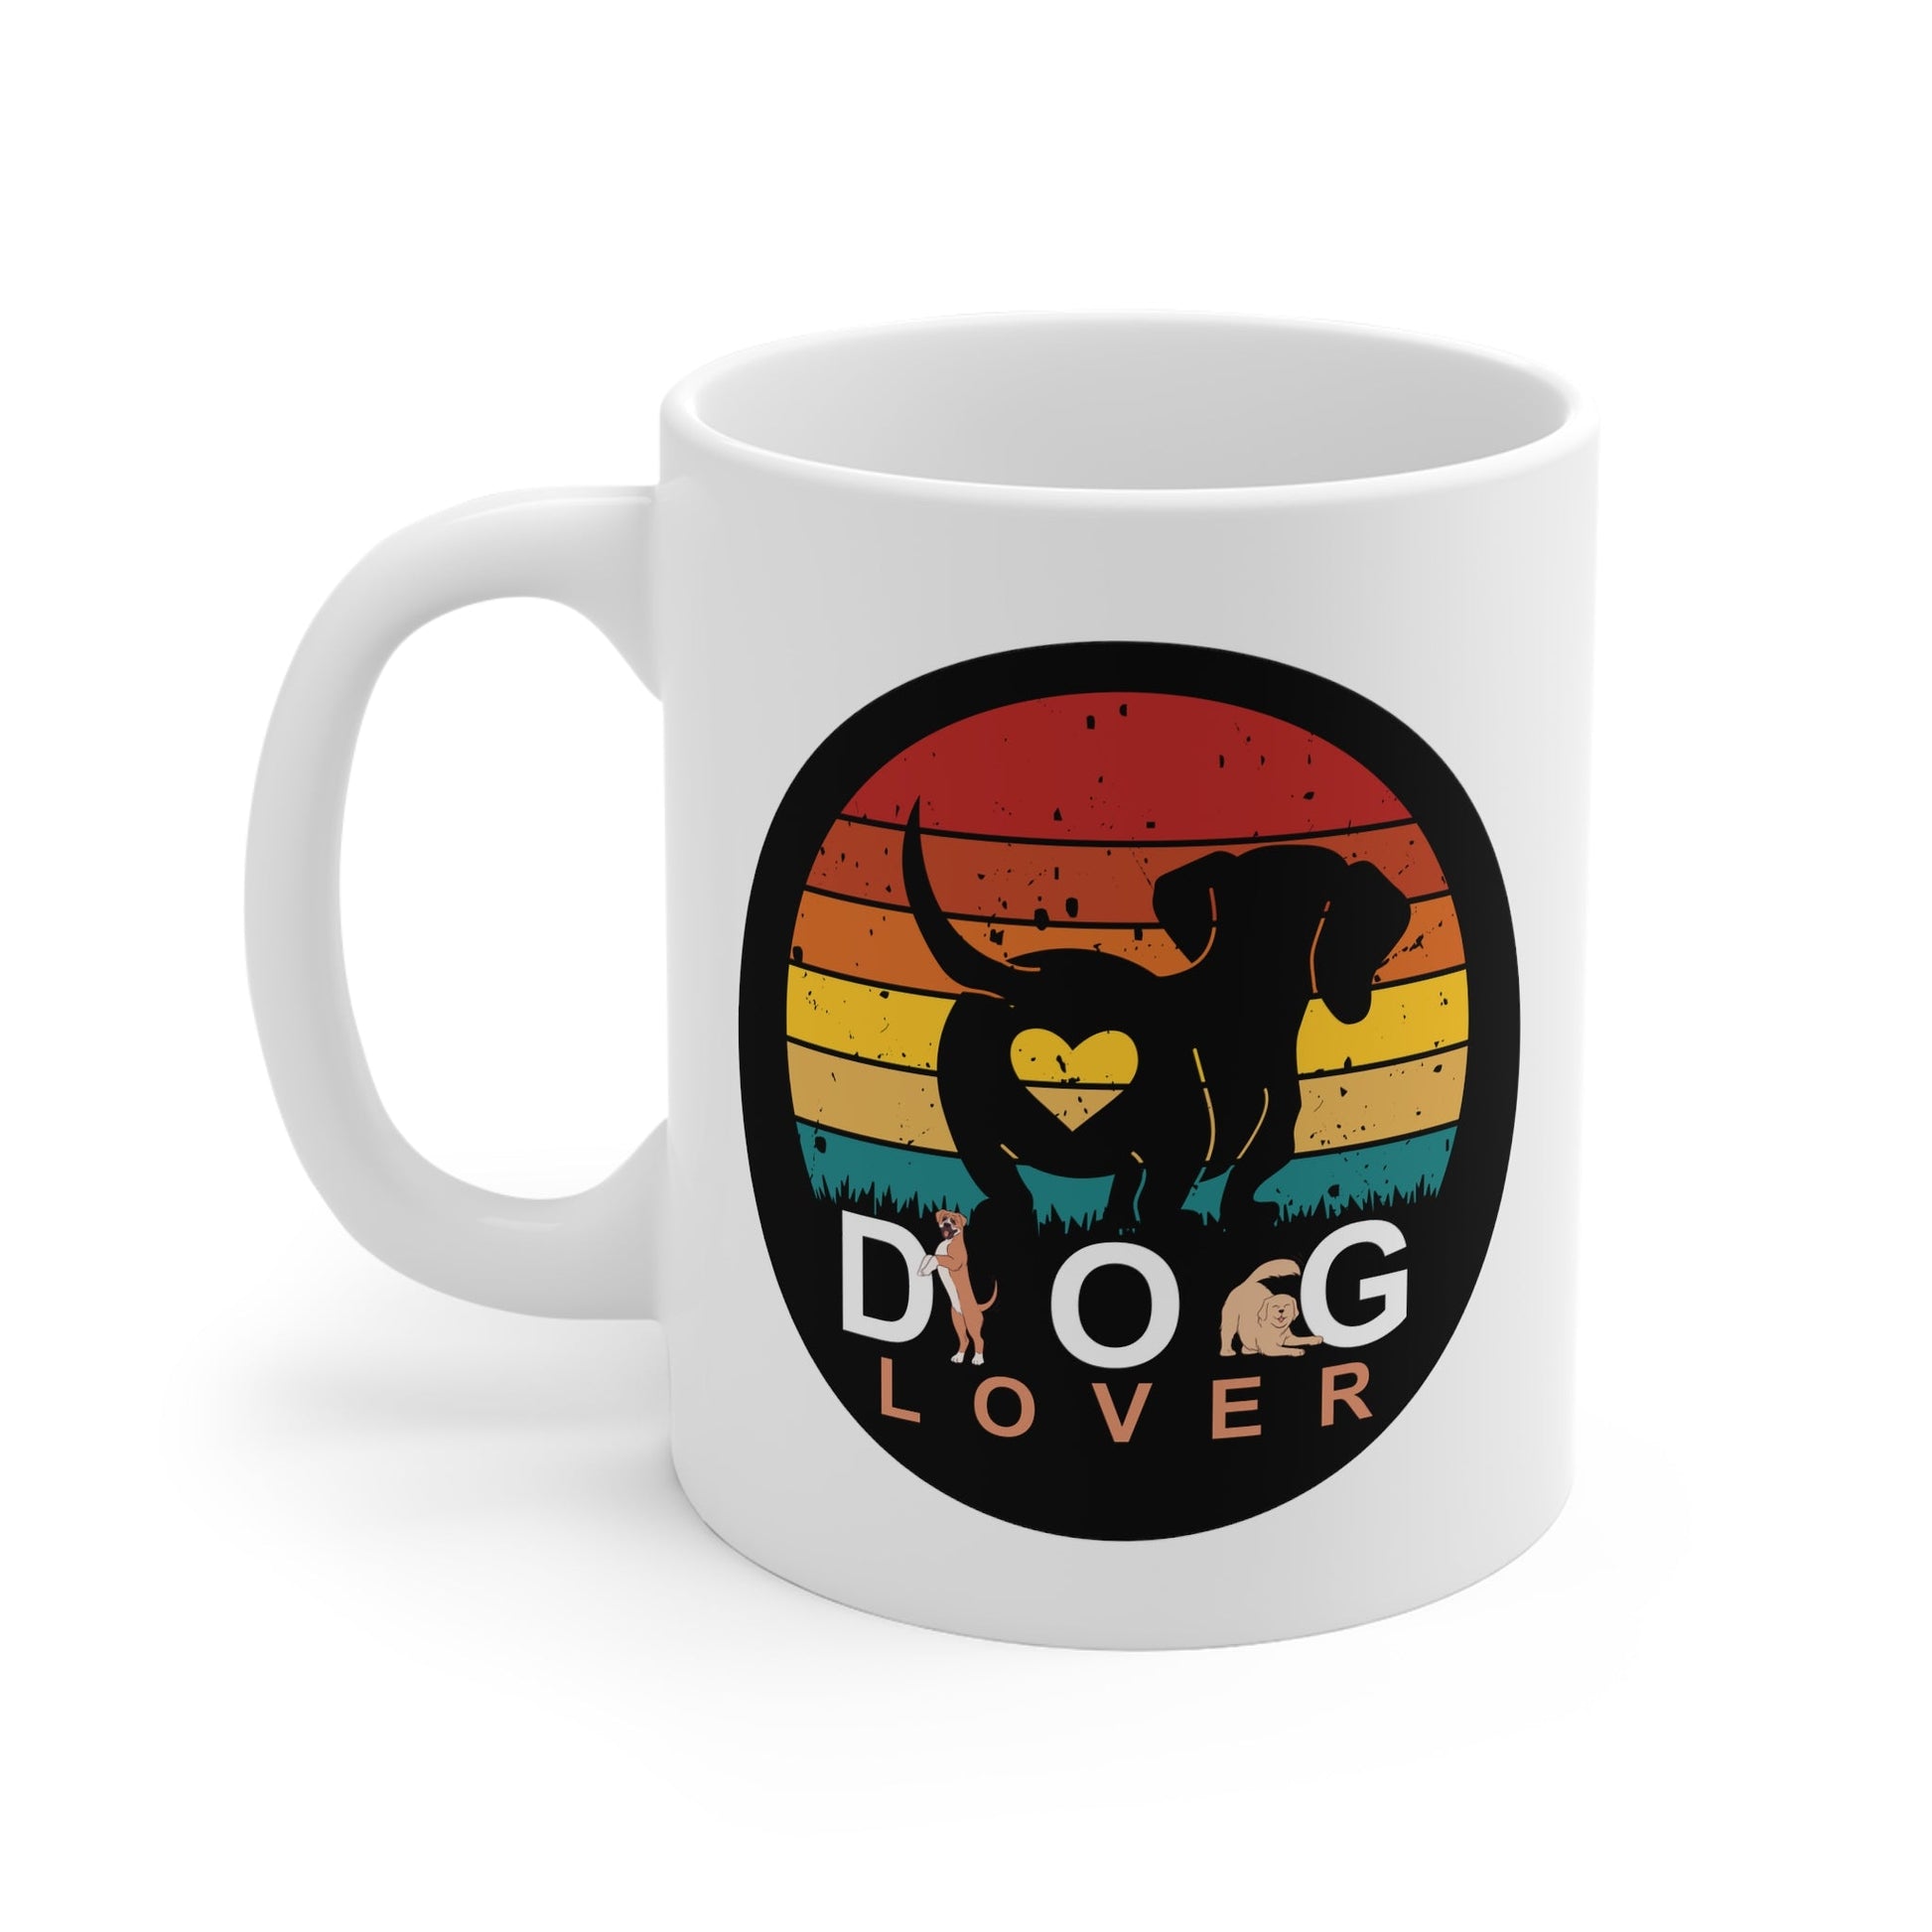 Dog Lover 11oz White Mug - Designs by DKMc